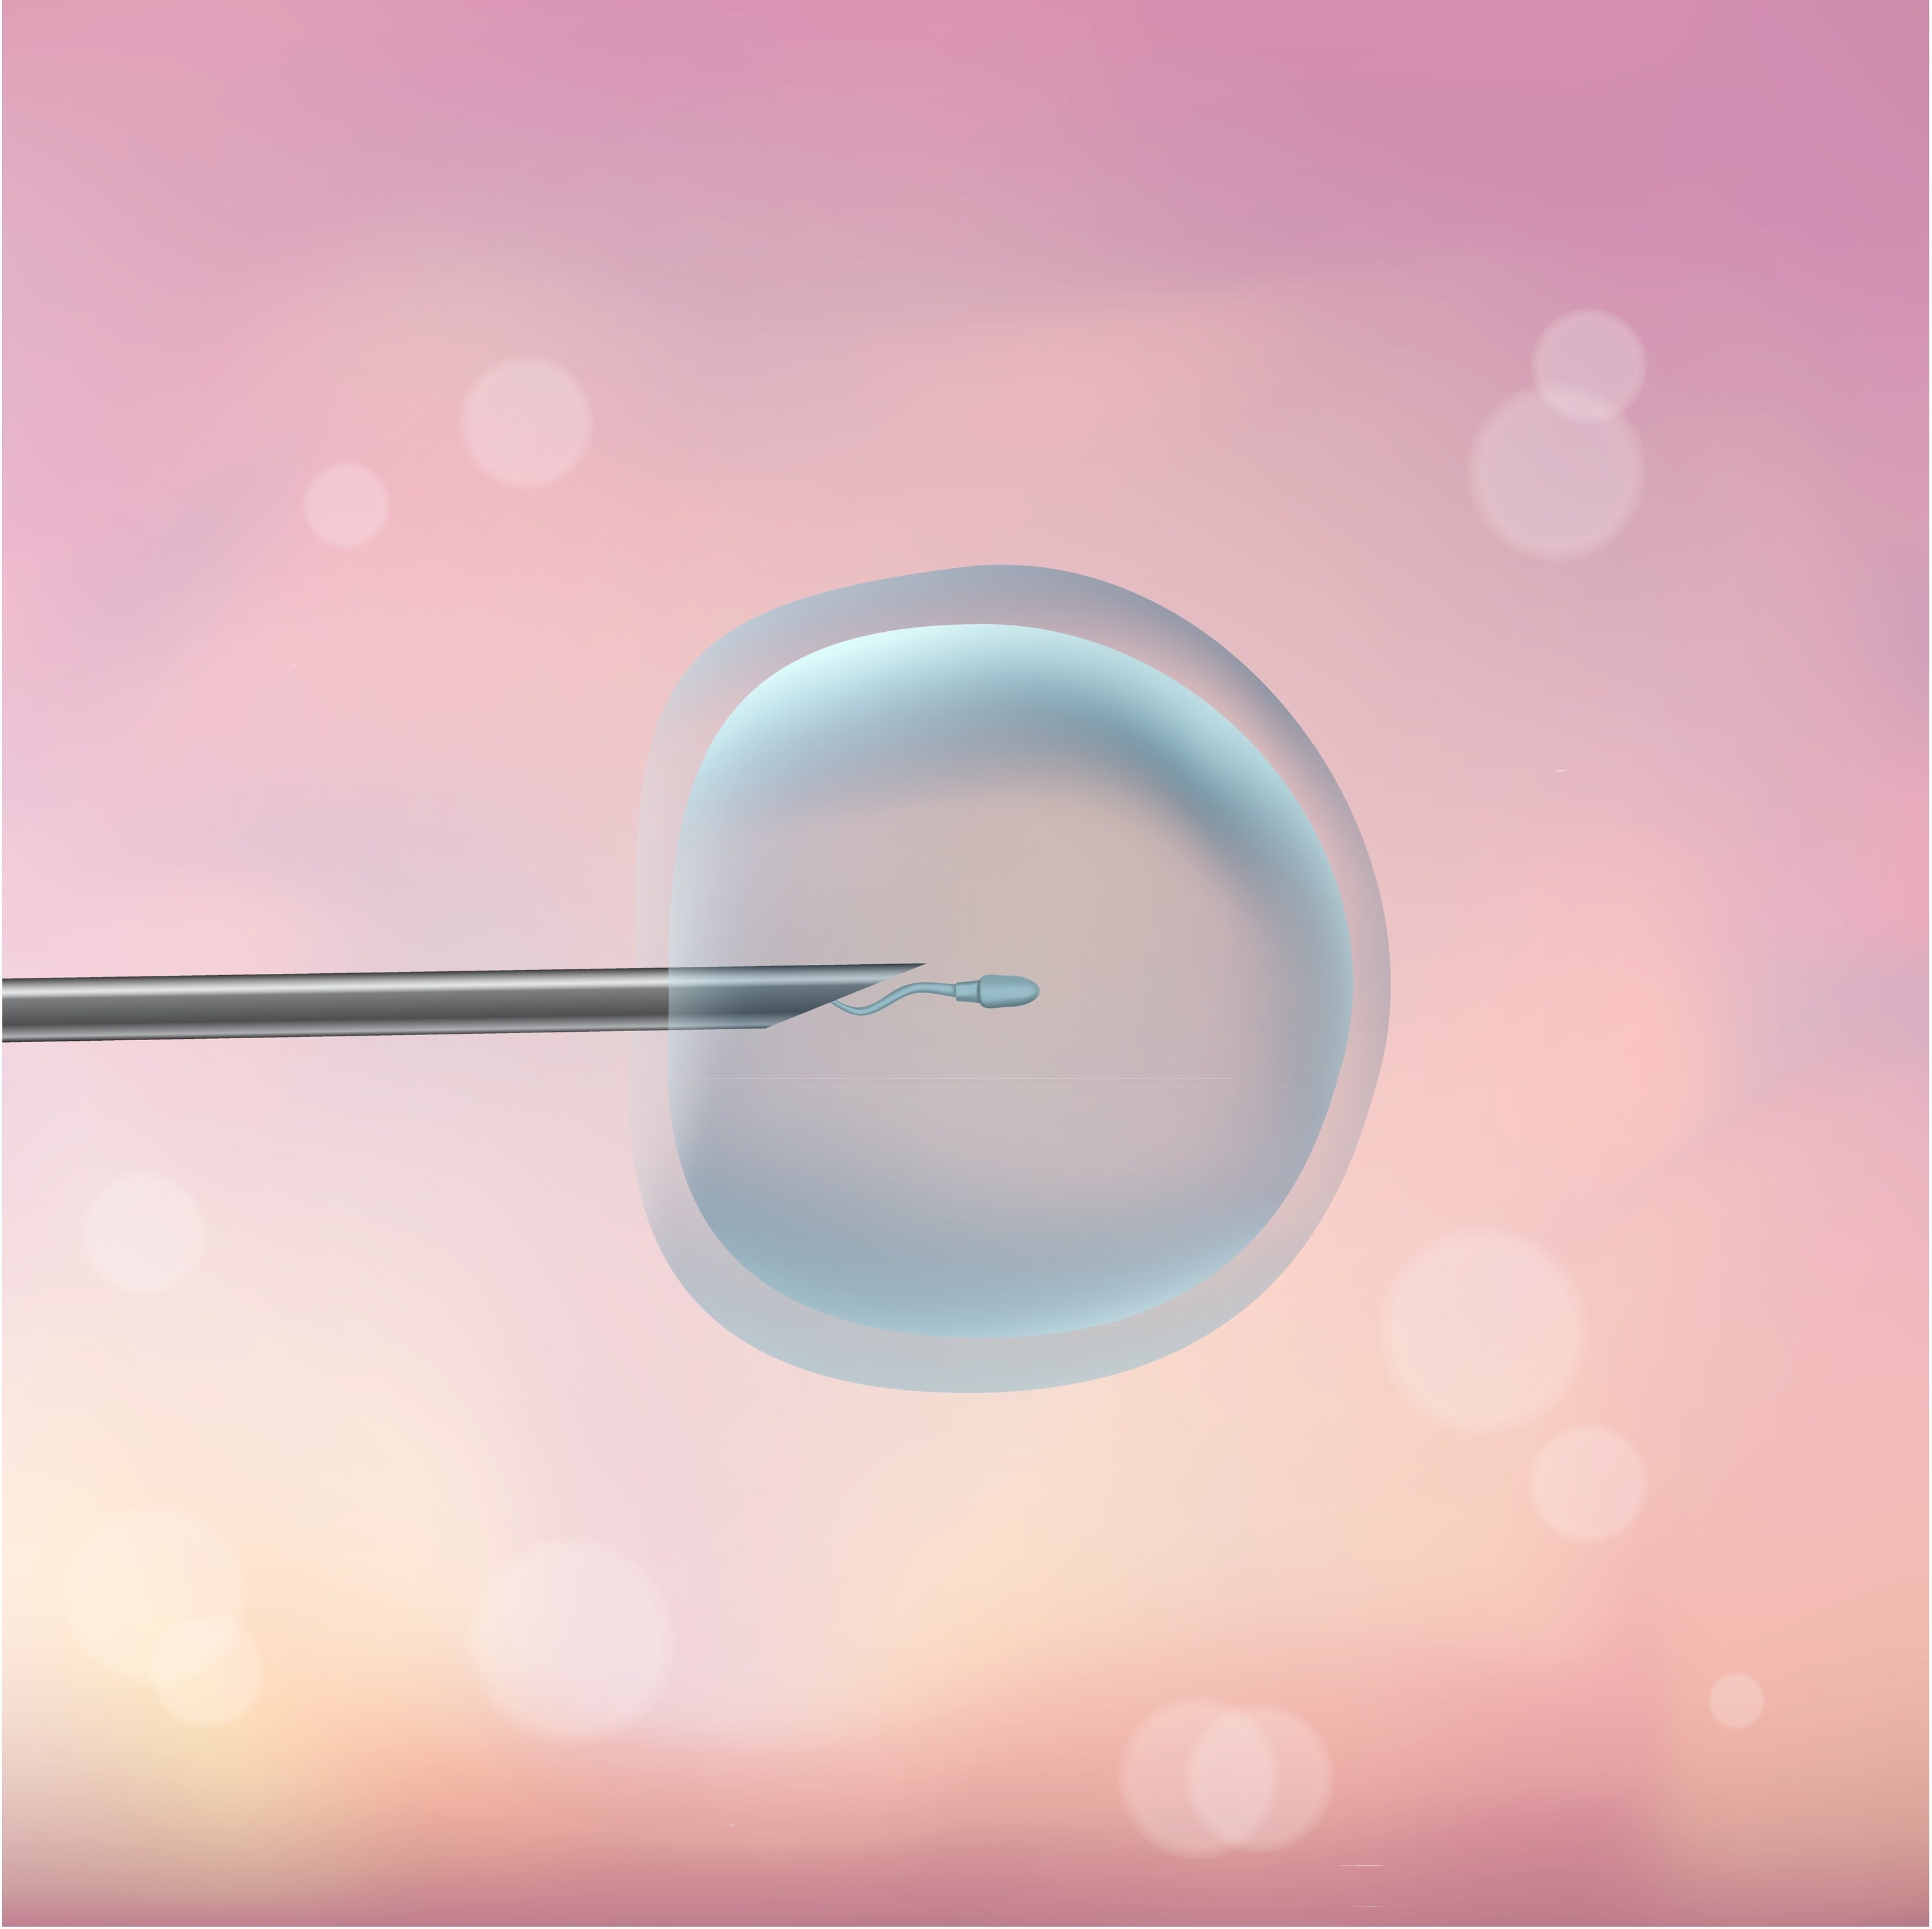 A drawn image of the IVF process internally